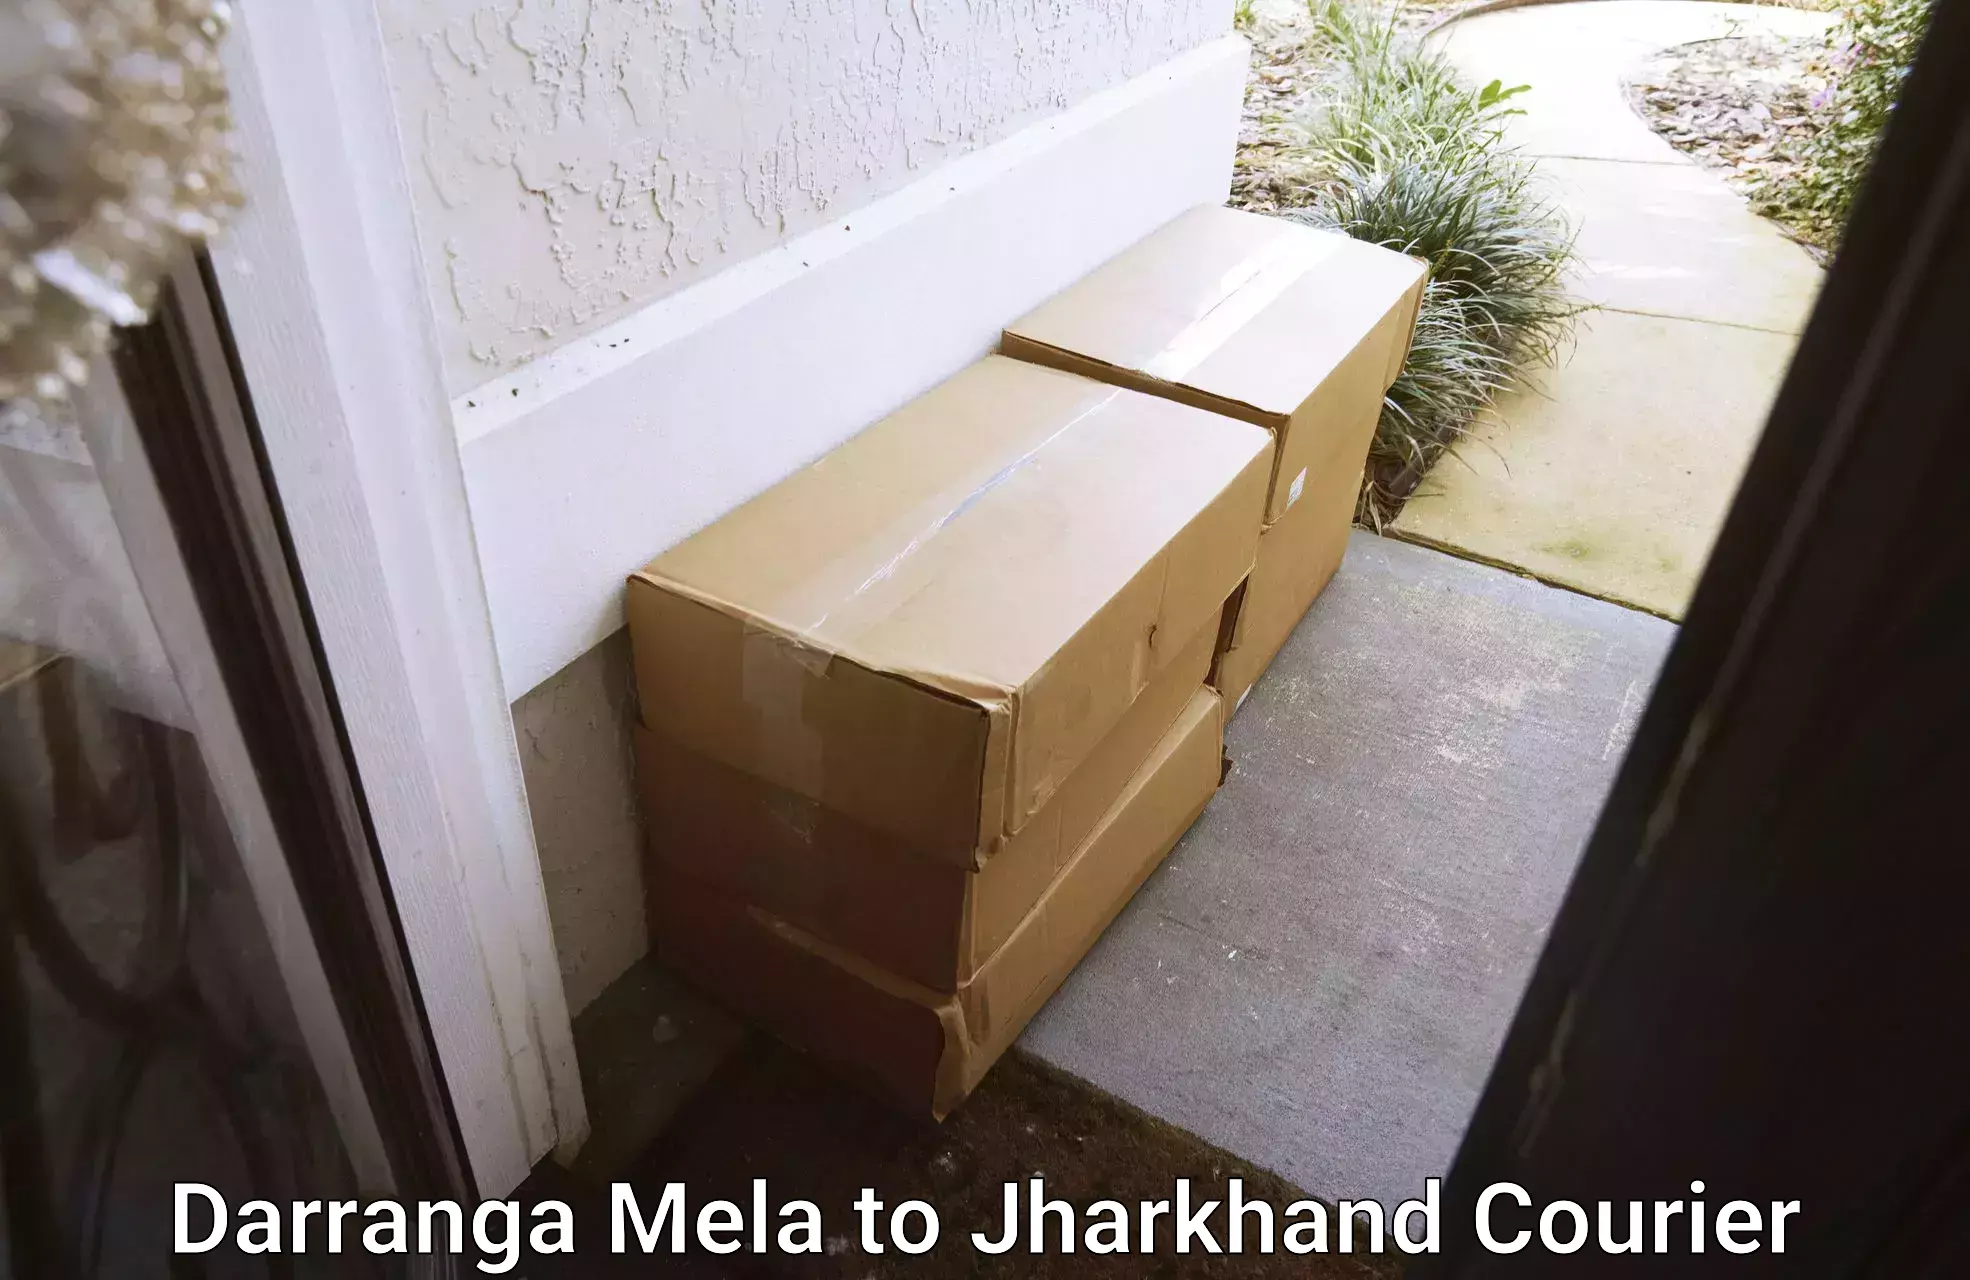 Professional courier handling Darranga Mela to Shikaripara